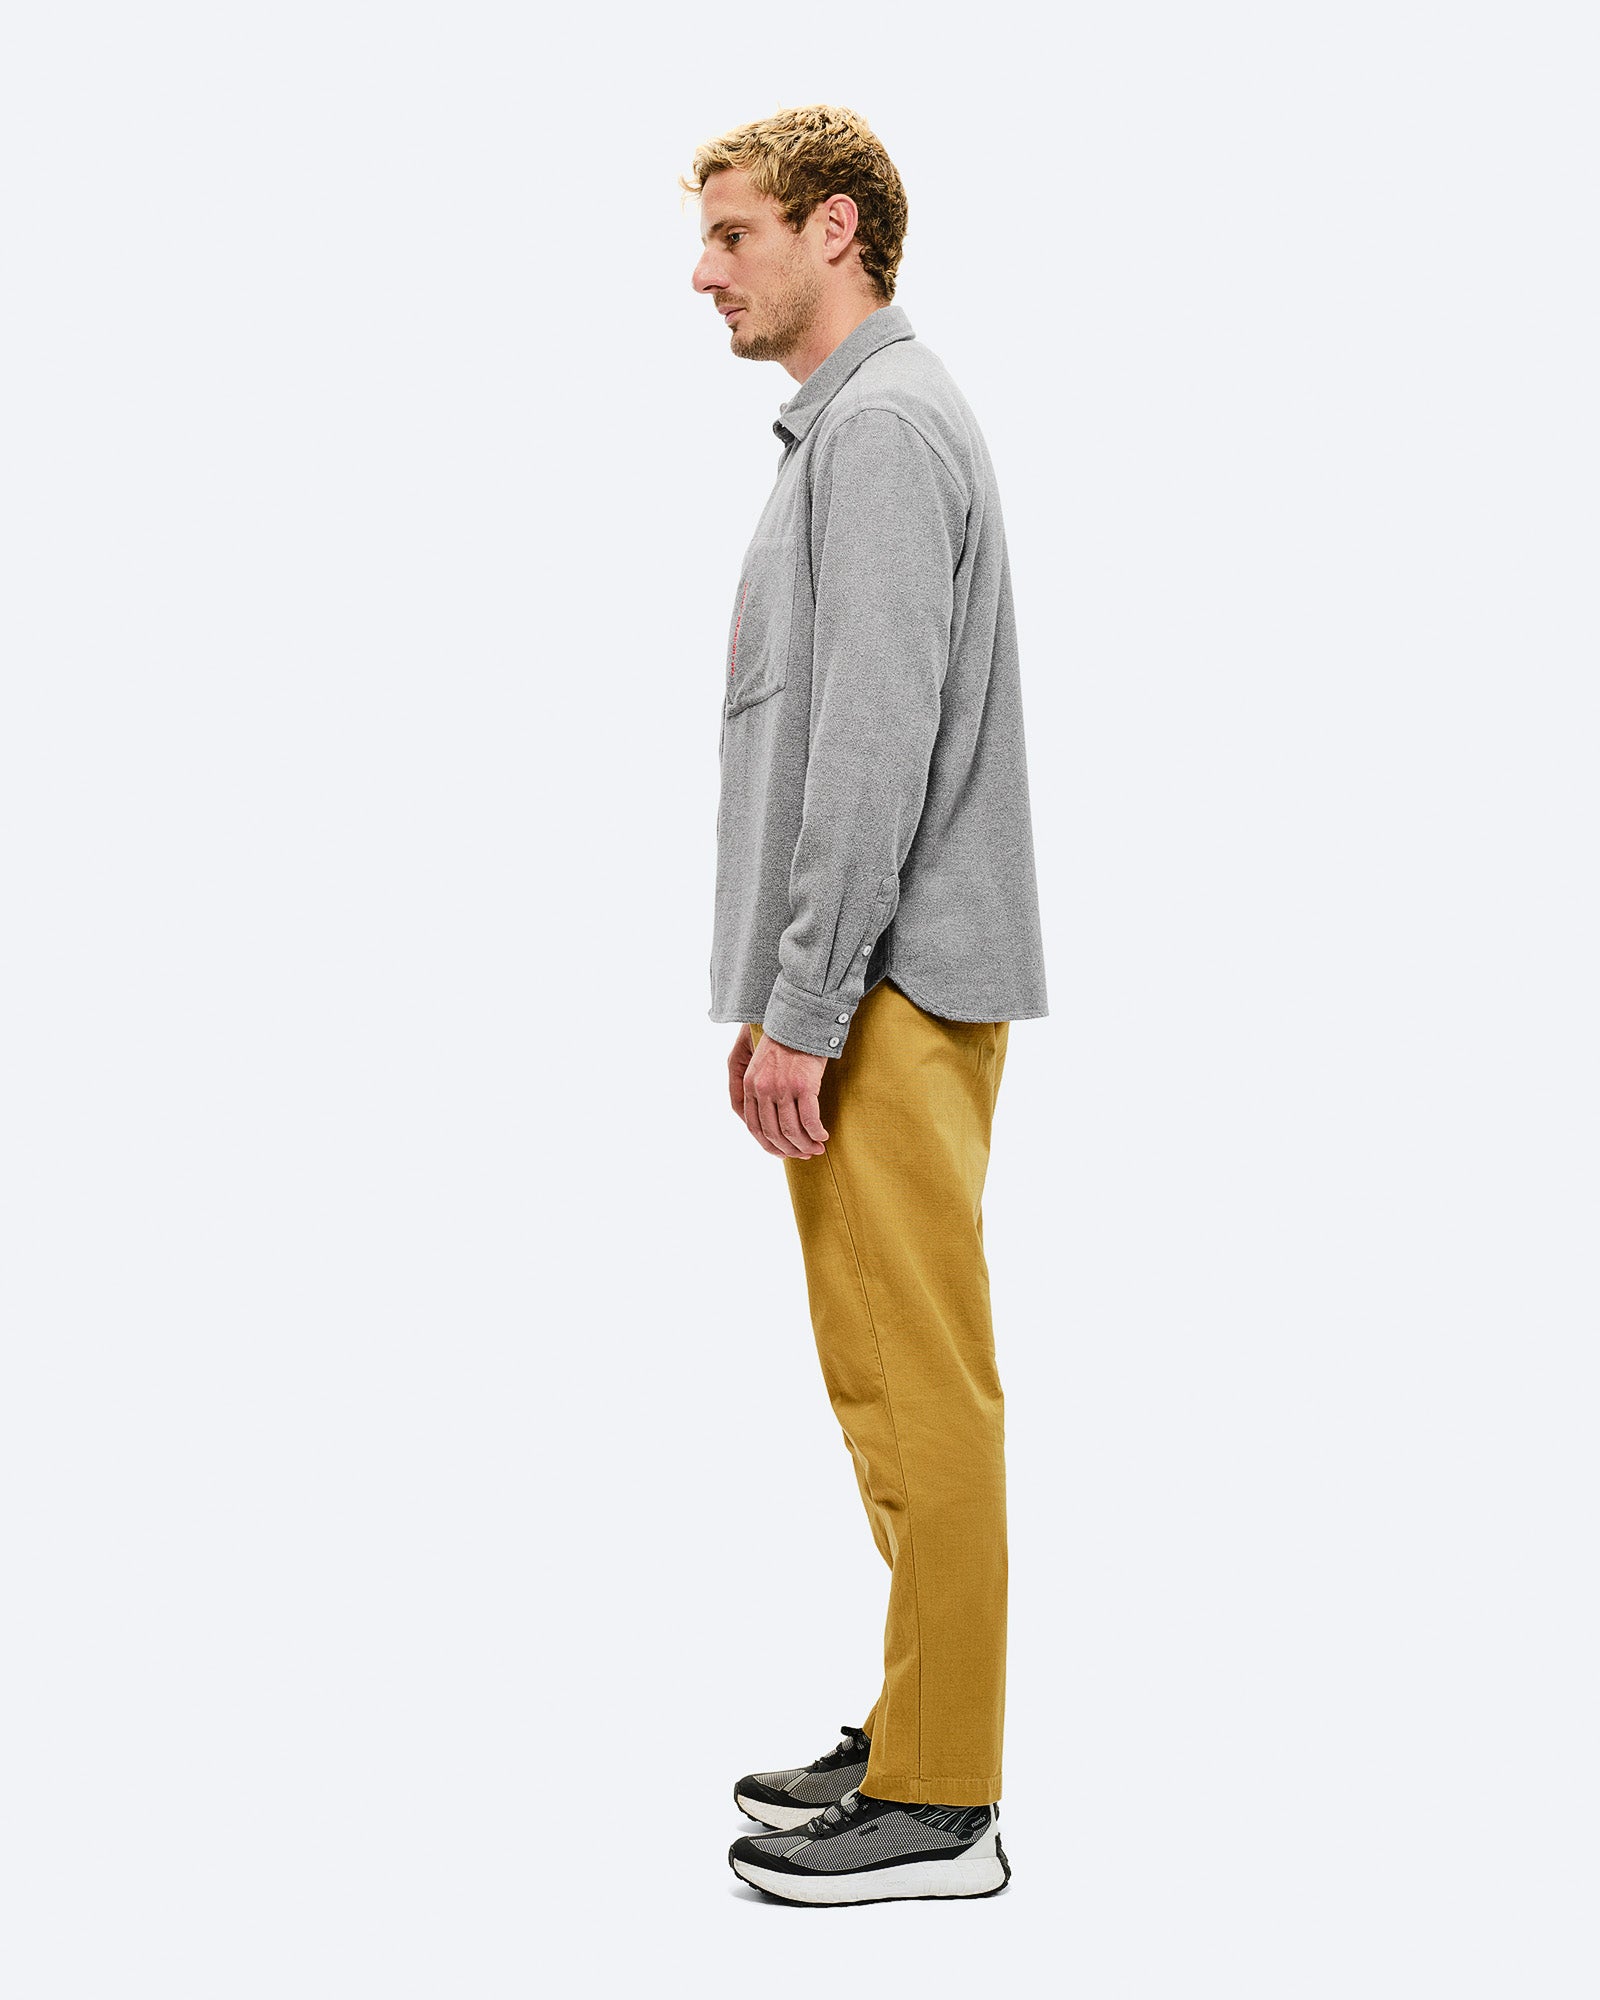 Garment Project Mens Dressed Smart Pants Trousers Grey Melange